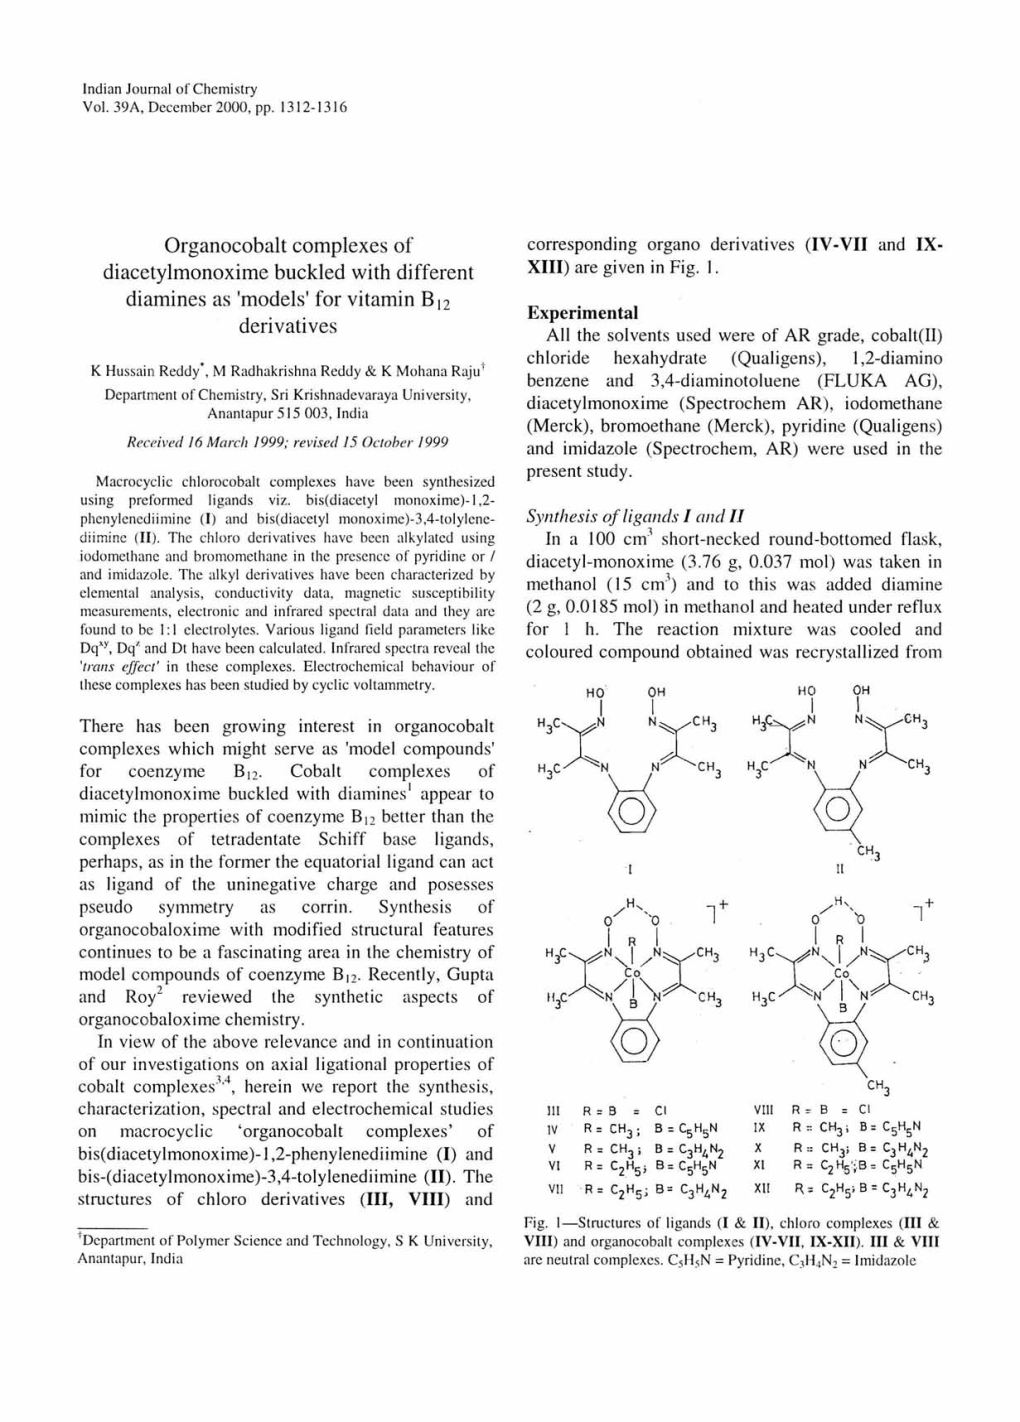 Organocobalt Complexes of Diacetylmonoxime Buckled